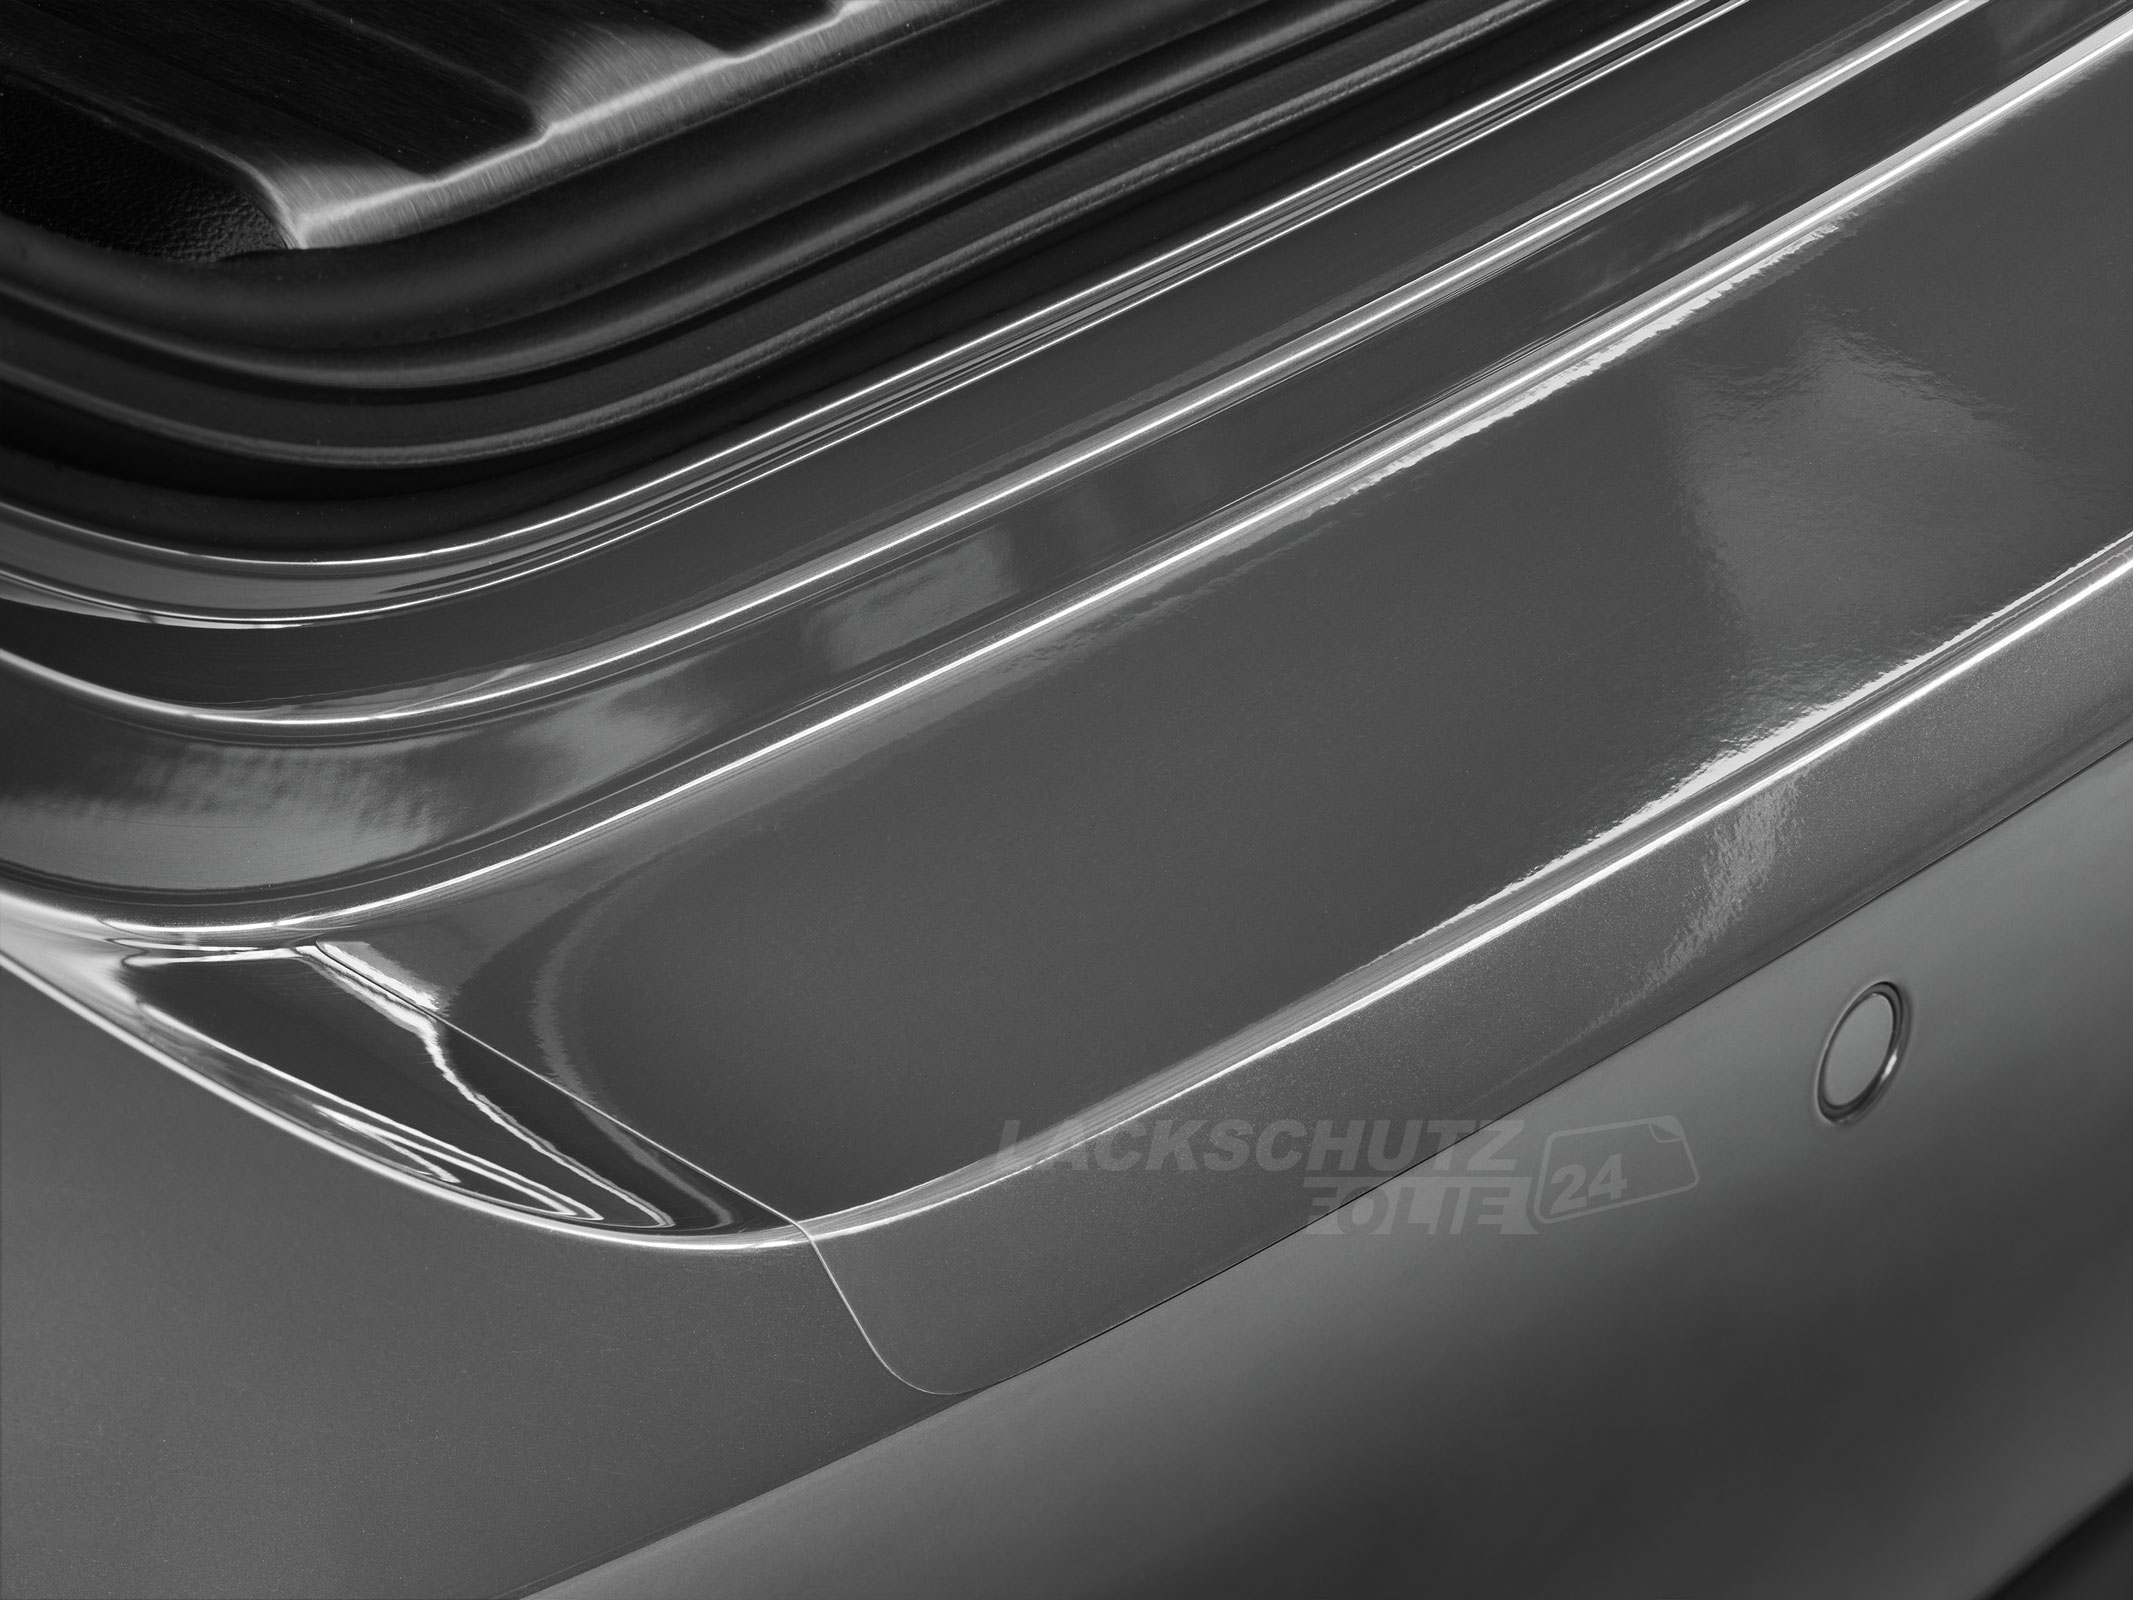 Ladekantenschutzfolie - Transparent Glatt Hochglänzend 150 µm stark für Skoda Fabia (II) Typ 5J, Facelift, BJ 2010-06/2014